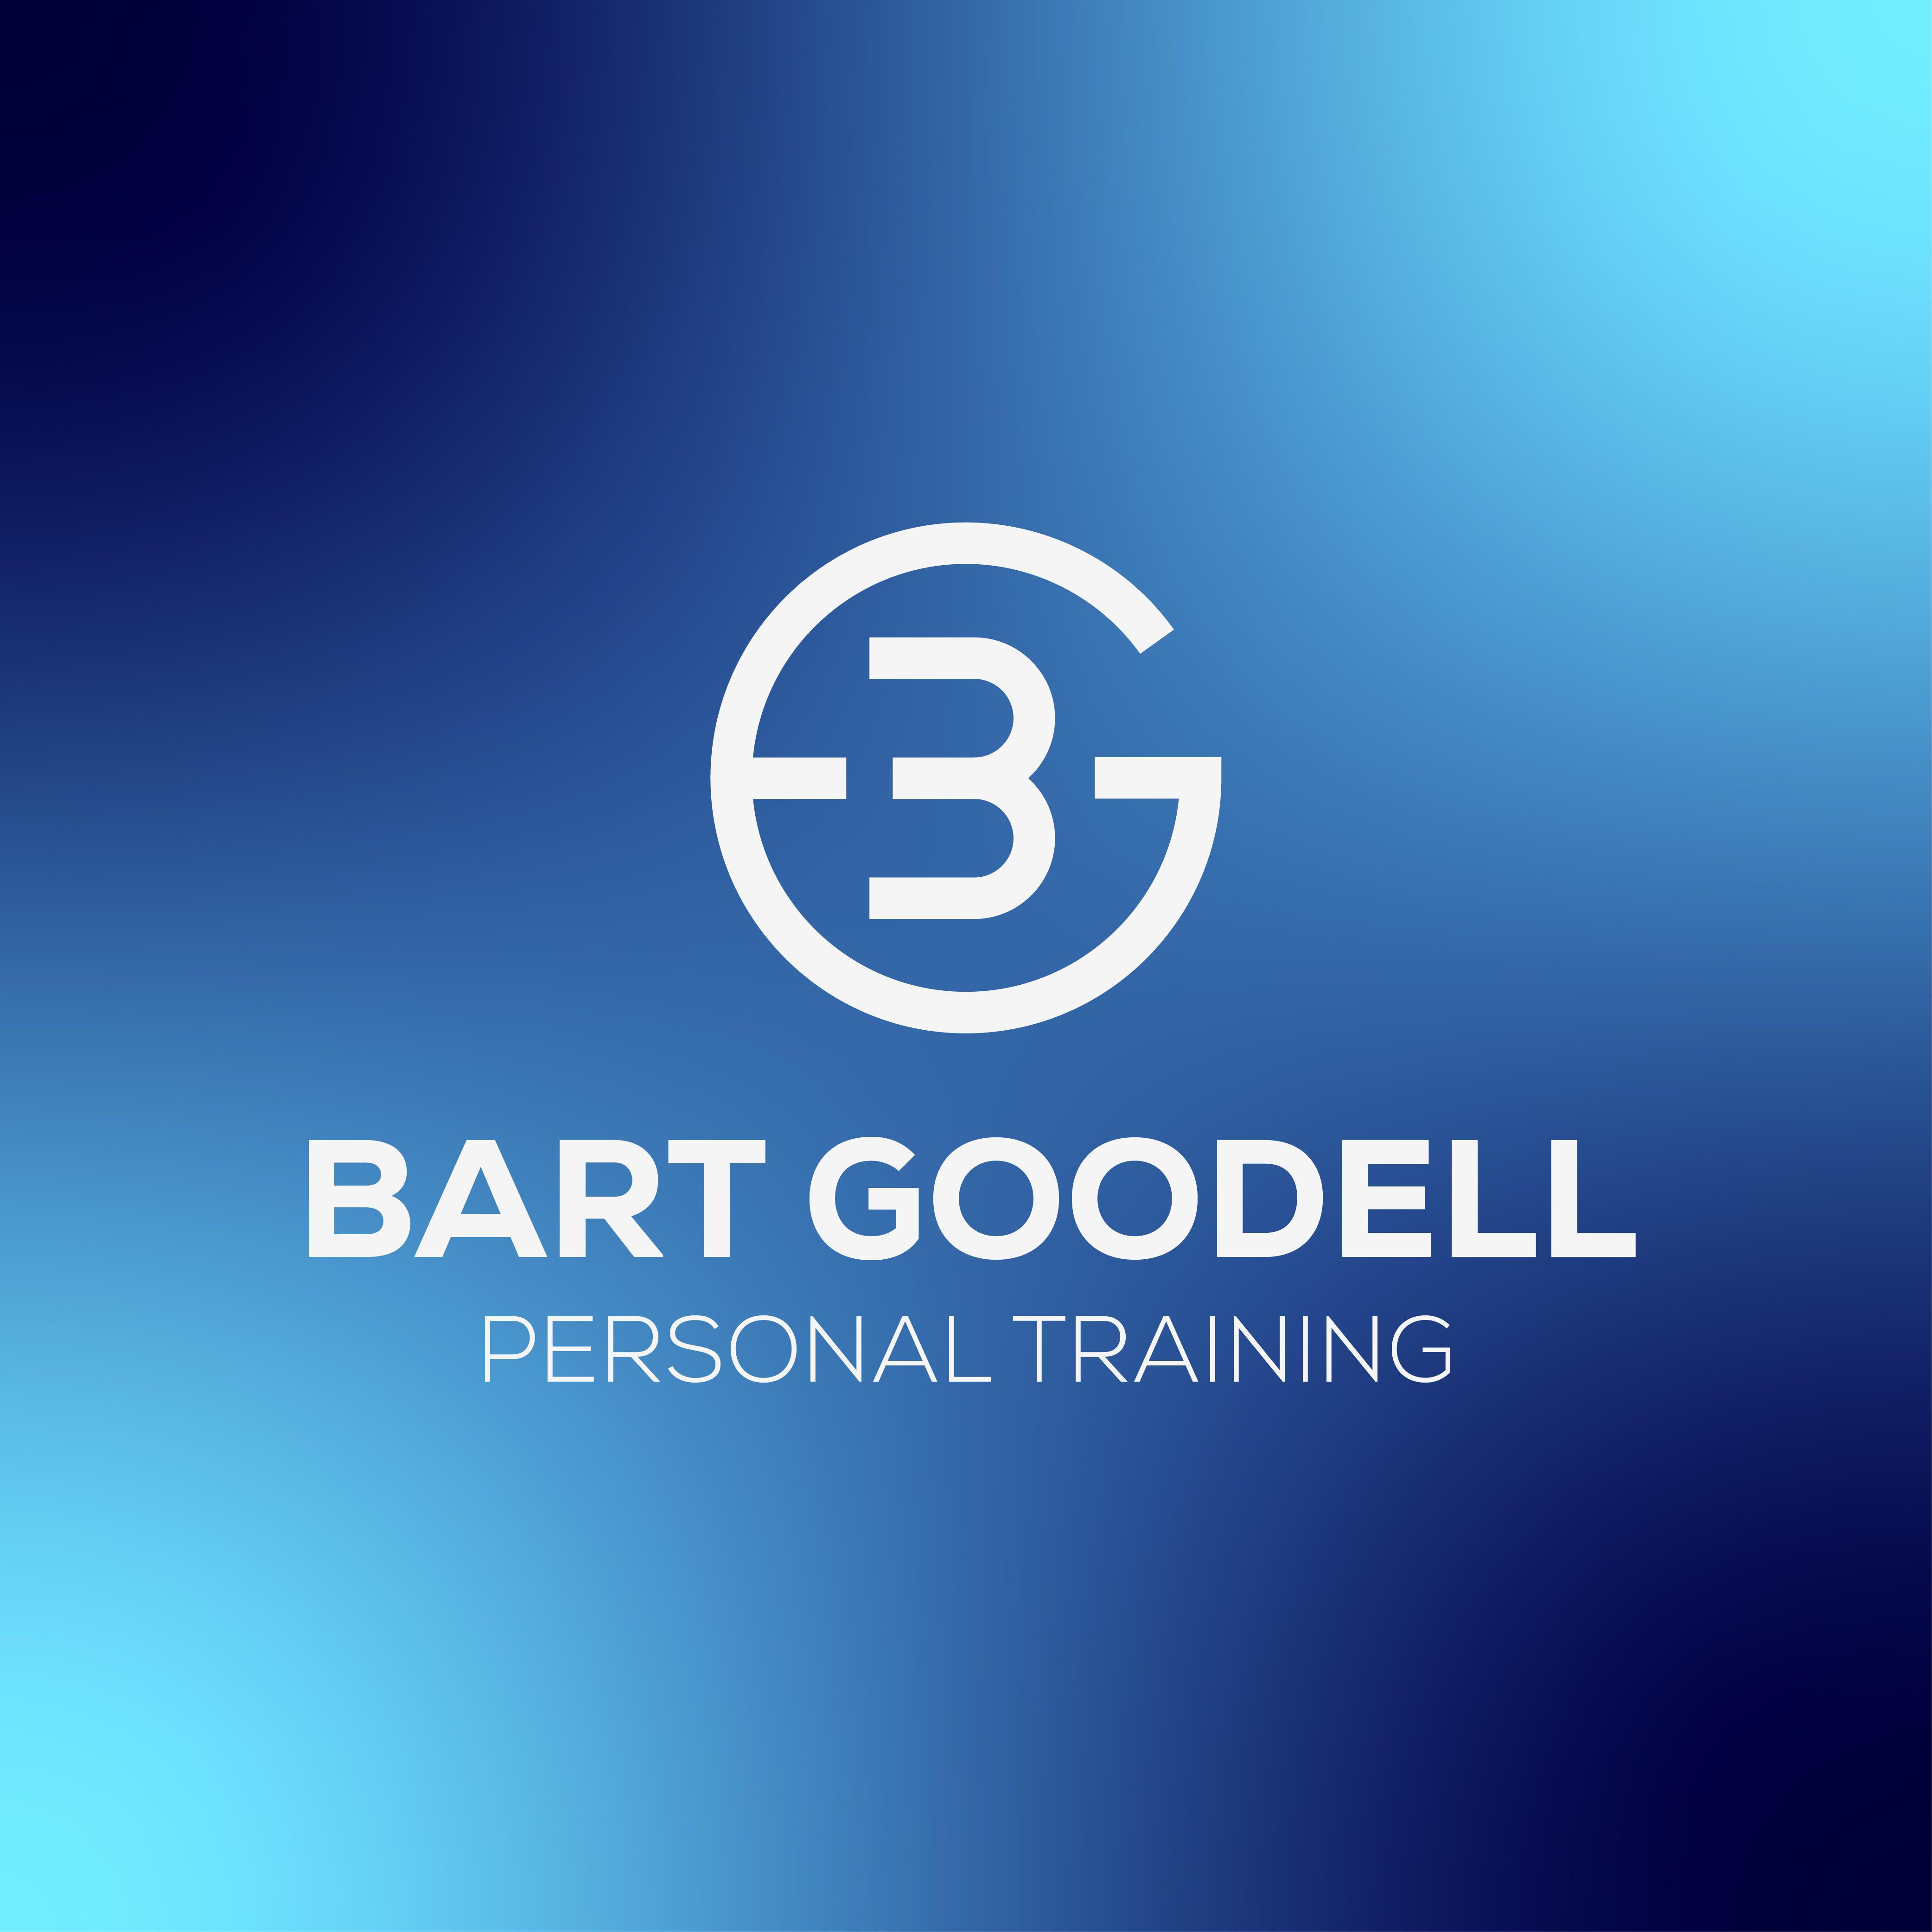 Bart Goodell Personal Training - Palo Alto, CA 94603 - (650)773-9006 | ShowMeLocal.com